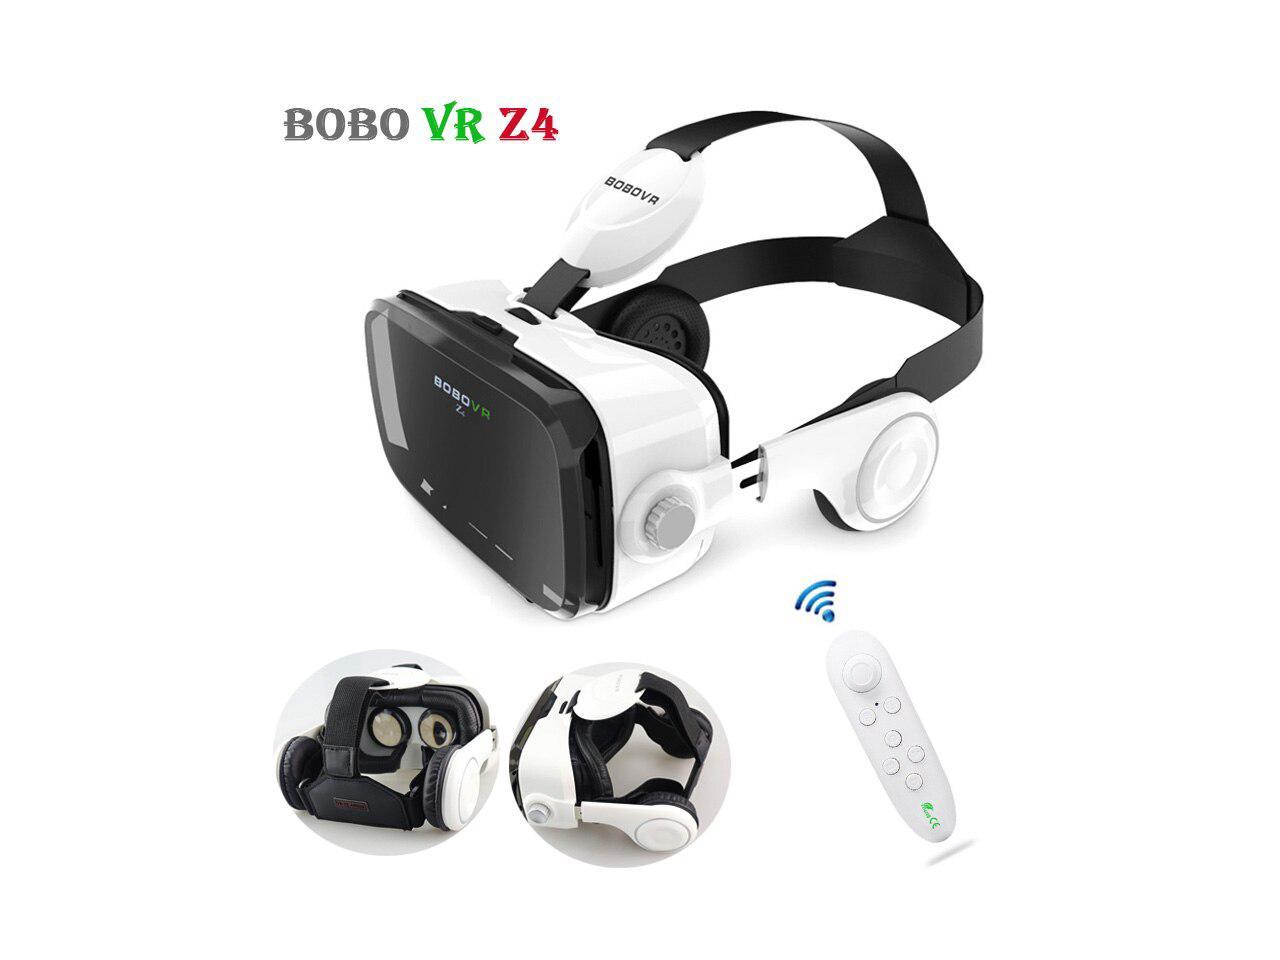 HISPETECH Original BOBOVR Z4 VR Headset Virtual Reality VR Glasses Stereo 120 FOV 3D BOBO Google Cardboard VR Head Mount with Bluetooth Remote for 4-6' Smartphone